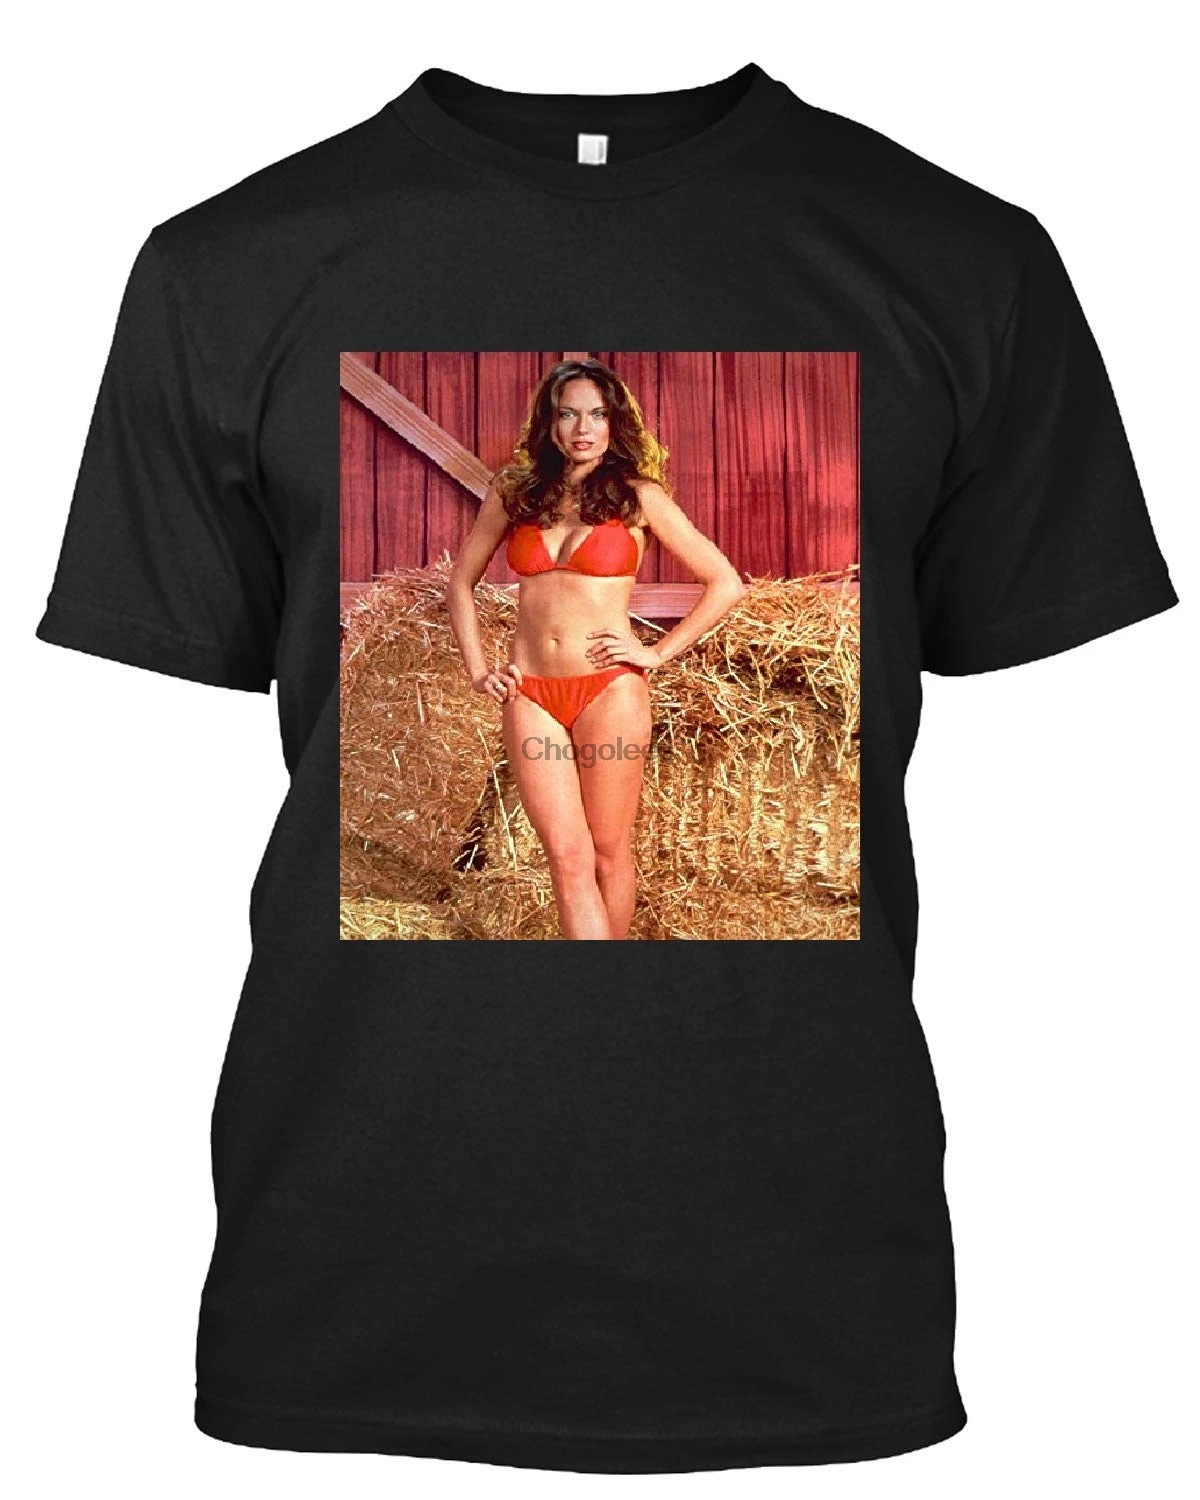 Catherine Bach Dukes of Hazzard Red Bikini T Shirt Gift Tee for Men Women  Unisex T Shirt (Black M)|T-Shirts| - AliExpress